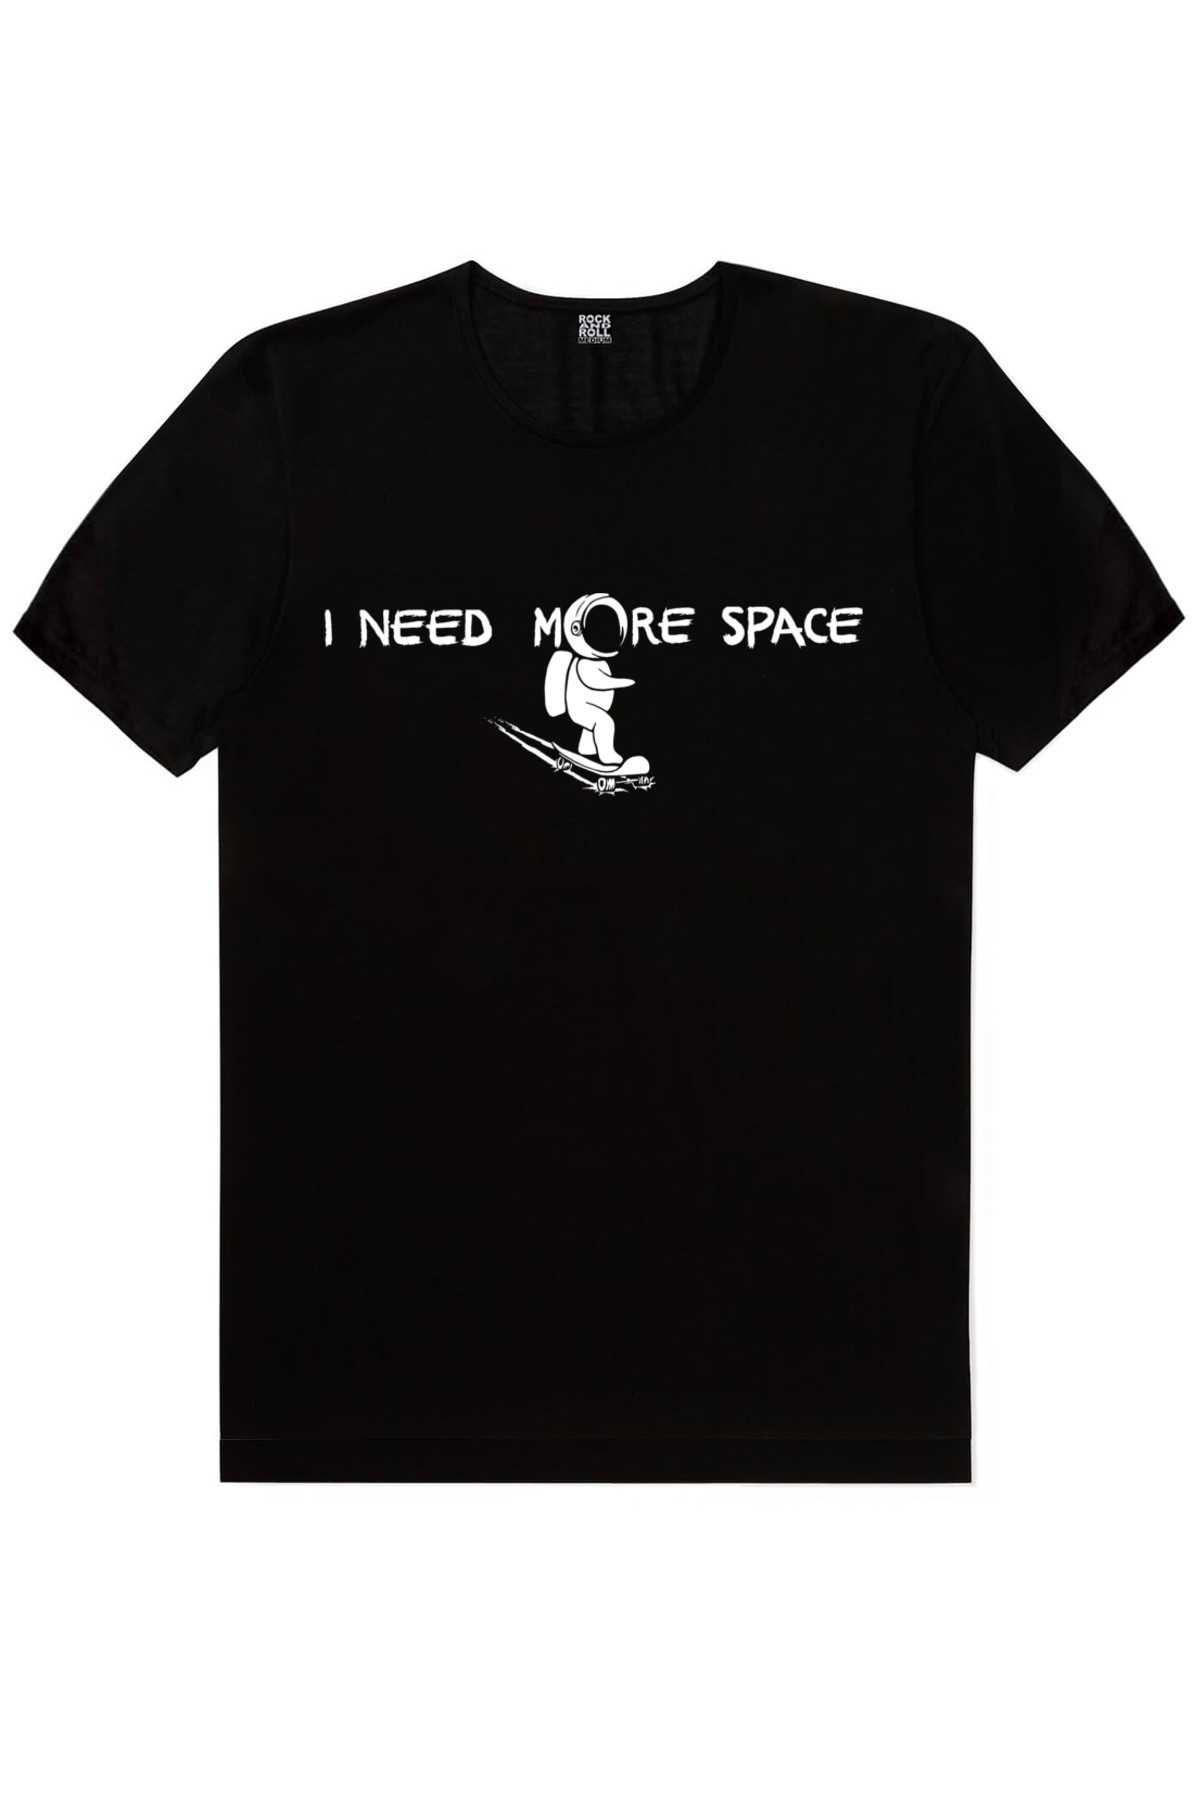 Spiral Uzaylı, Uzayda Kaykay, Grafitici Astronot Erkek 3'lü Eko Paket T-shirt